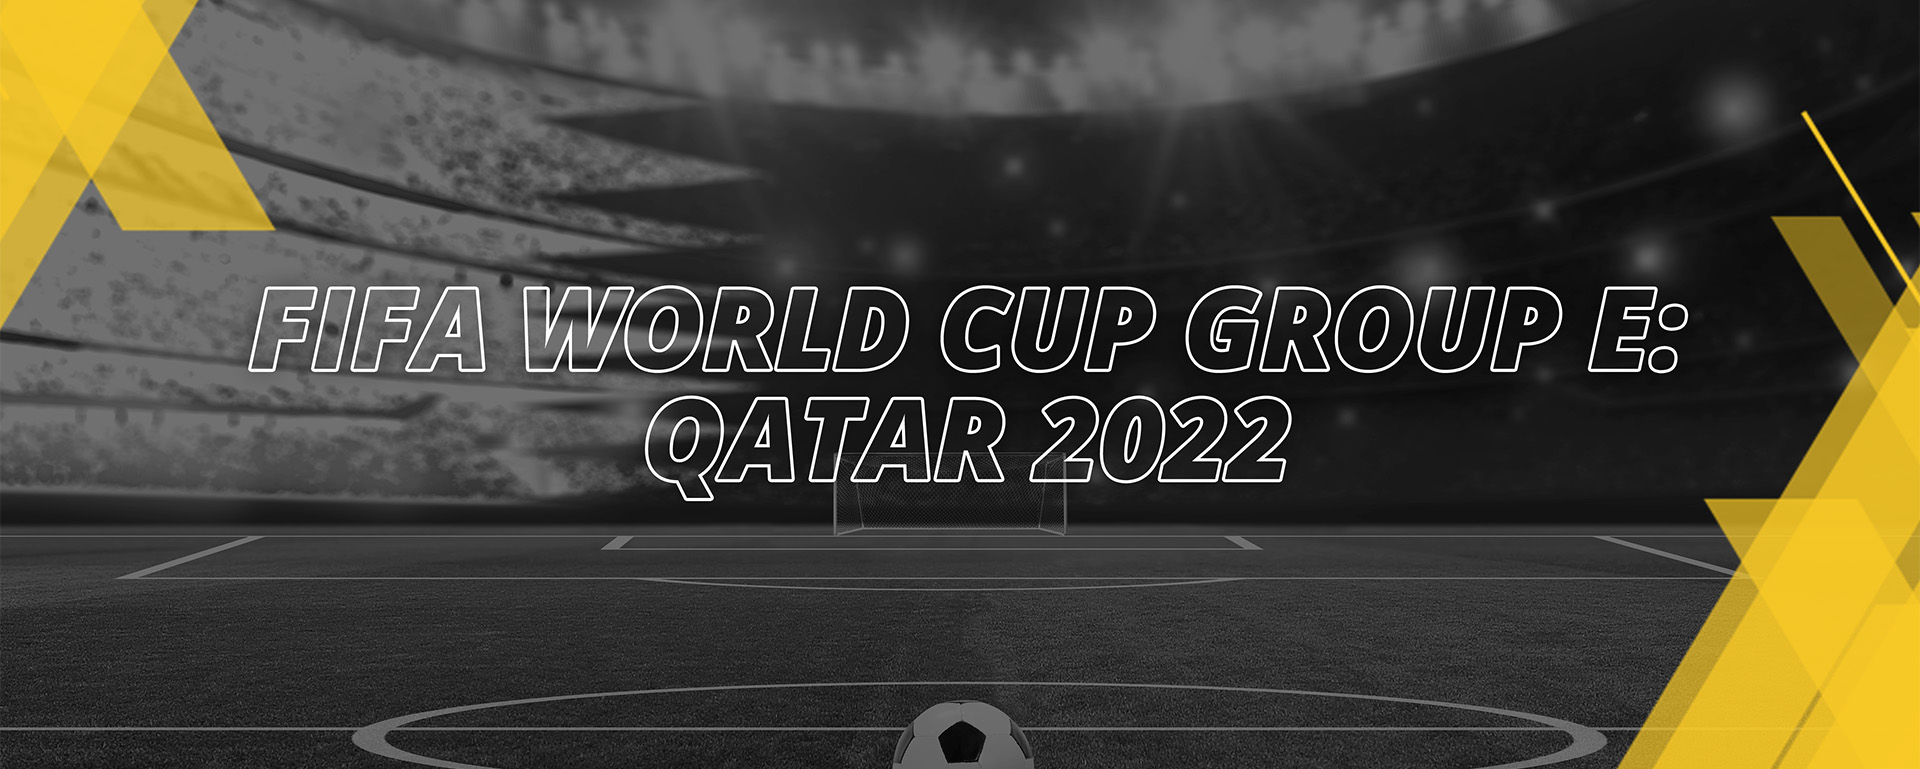 FIFA WORLD CUP GROUP E – QATAR 2022